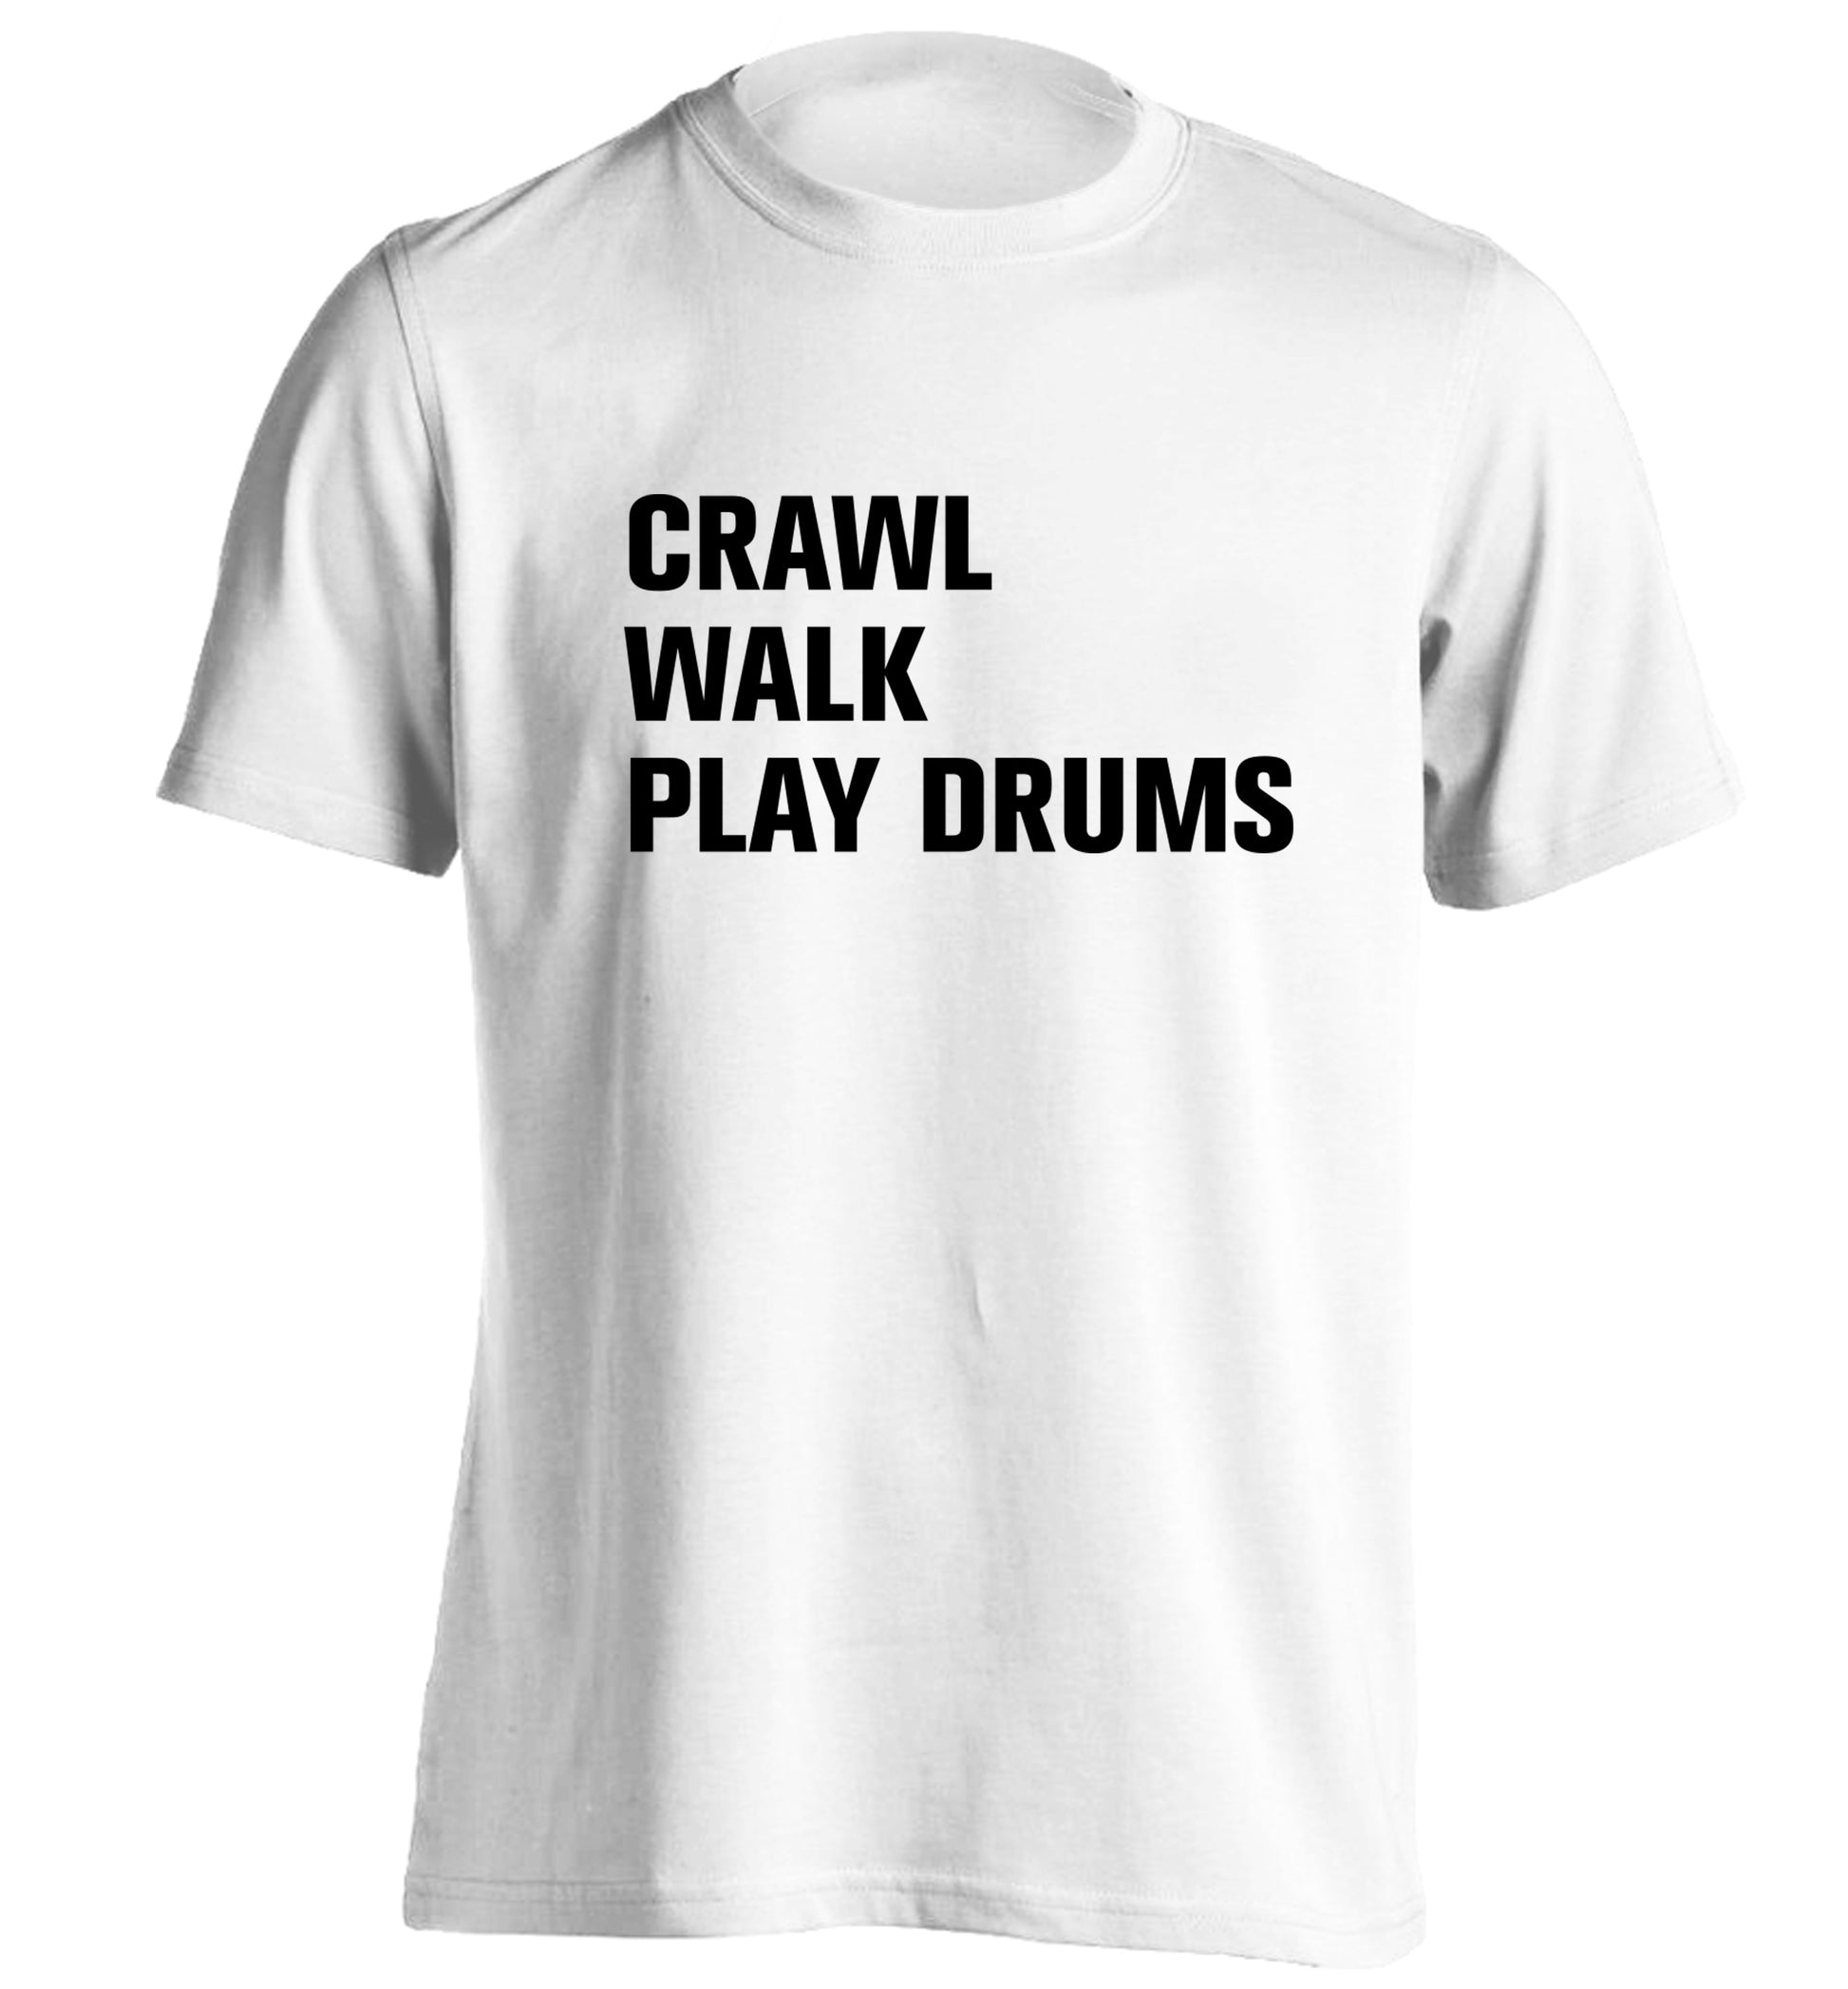 Crawl walk play drums adults unisex white Tshirt 2XL